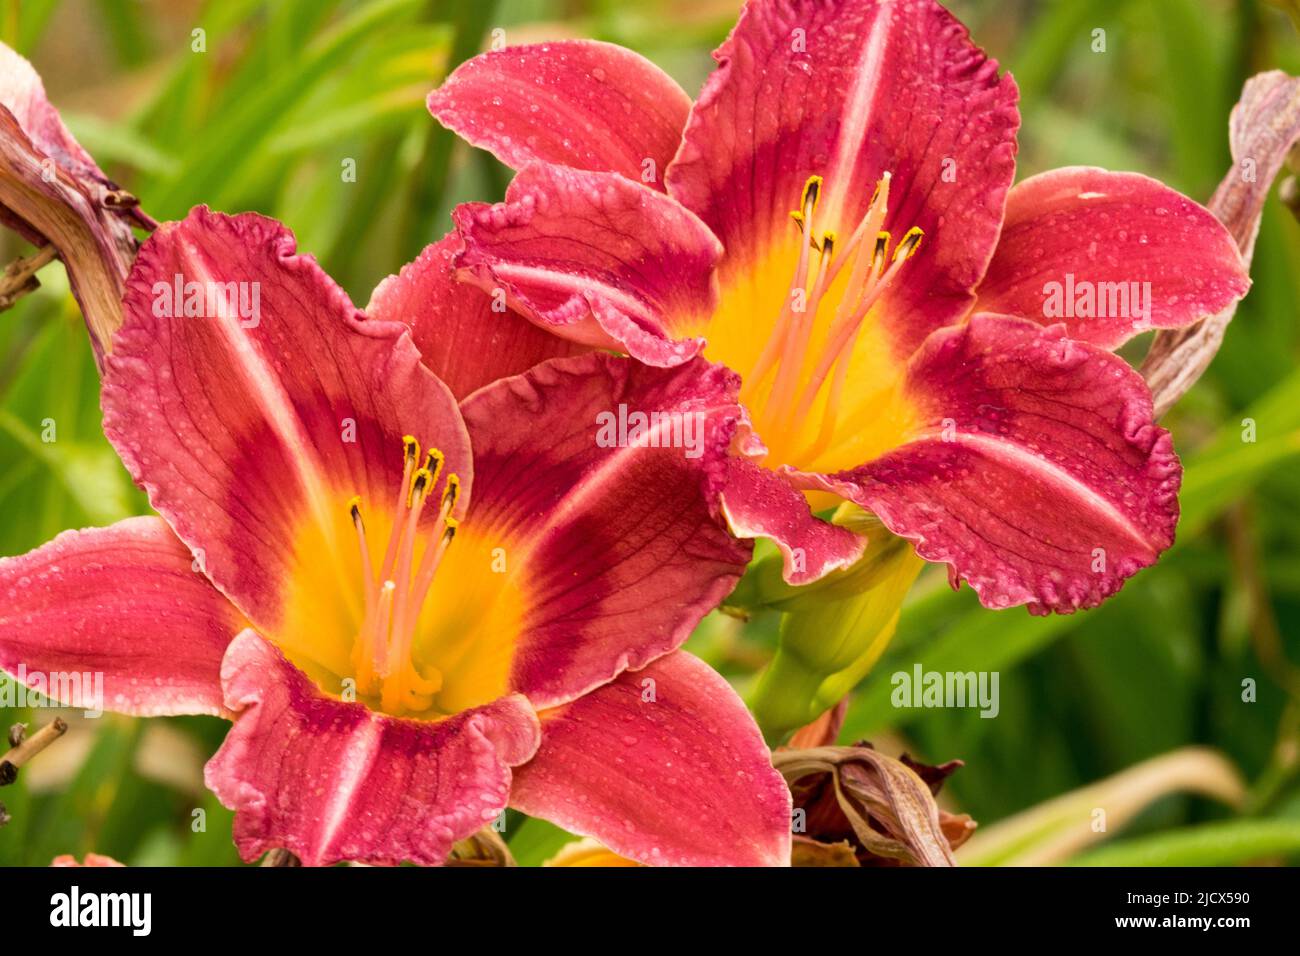 August flowers of the daylily, Hemerocallis 'Rose Festival' Stock Photo